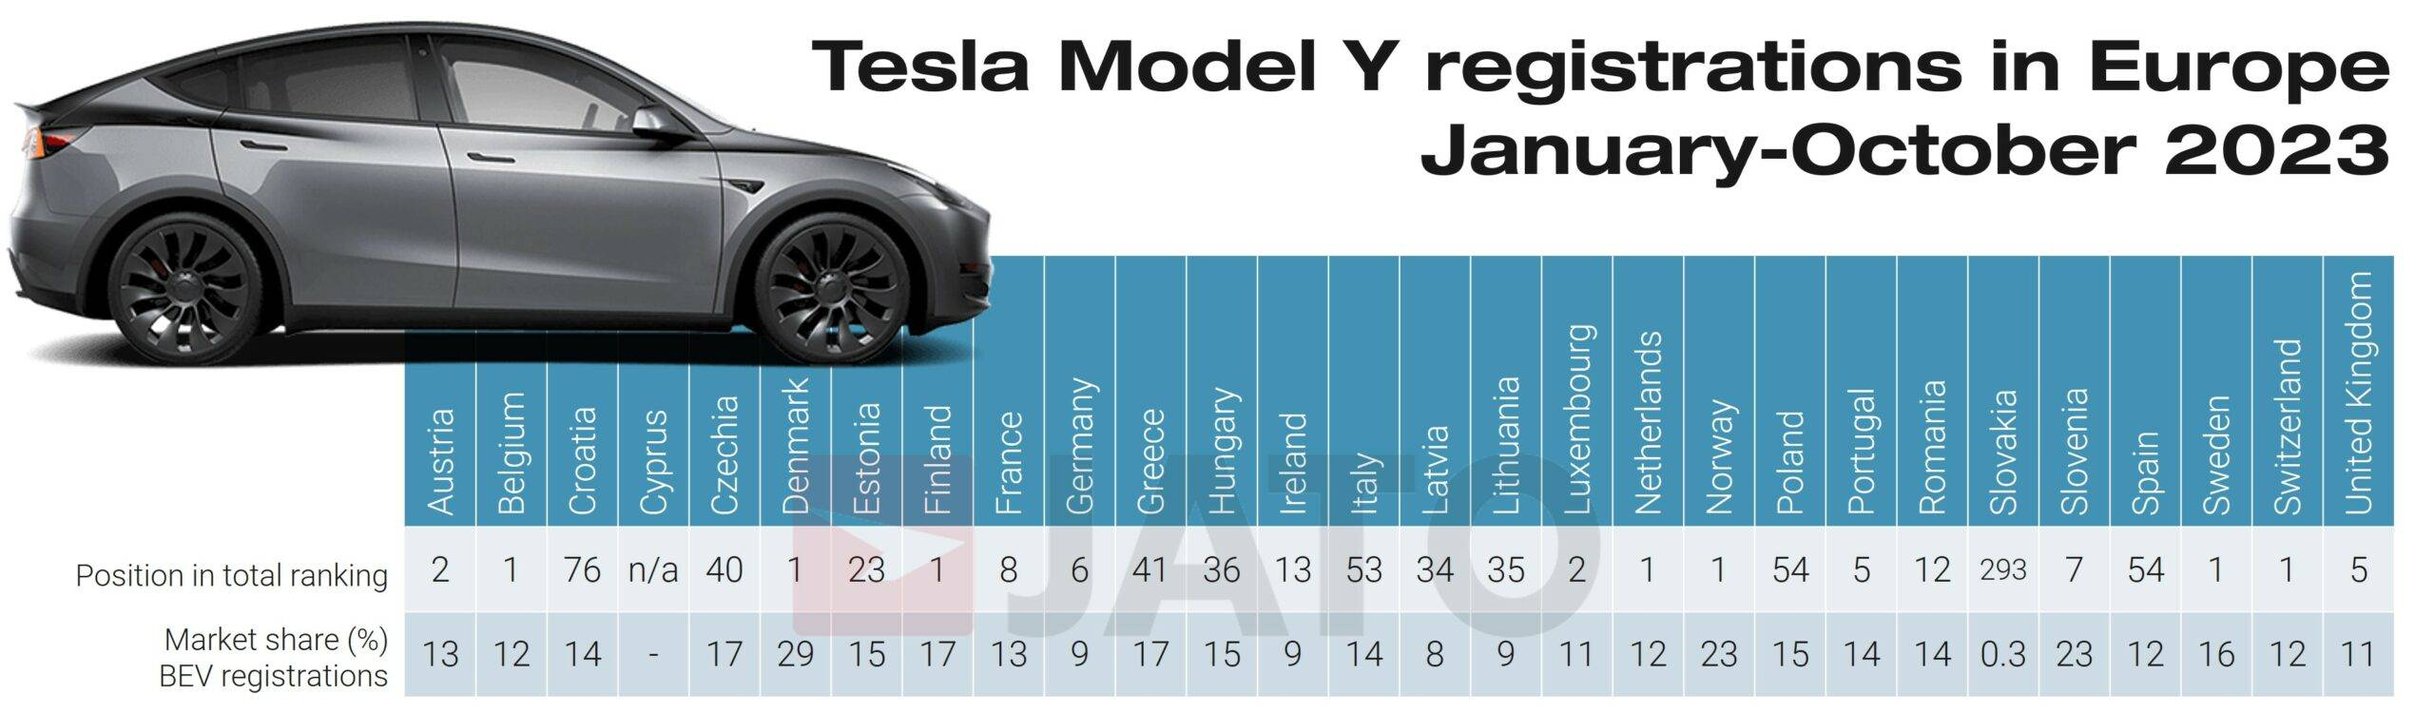 Tesla Model Y registrations in Europe